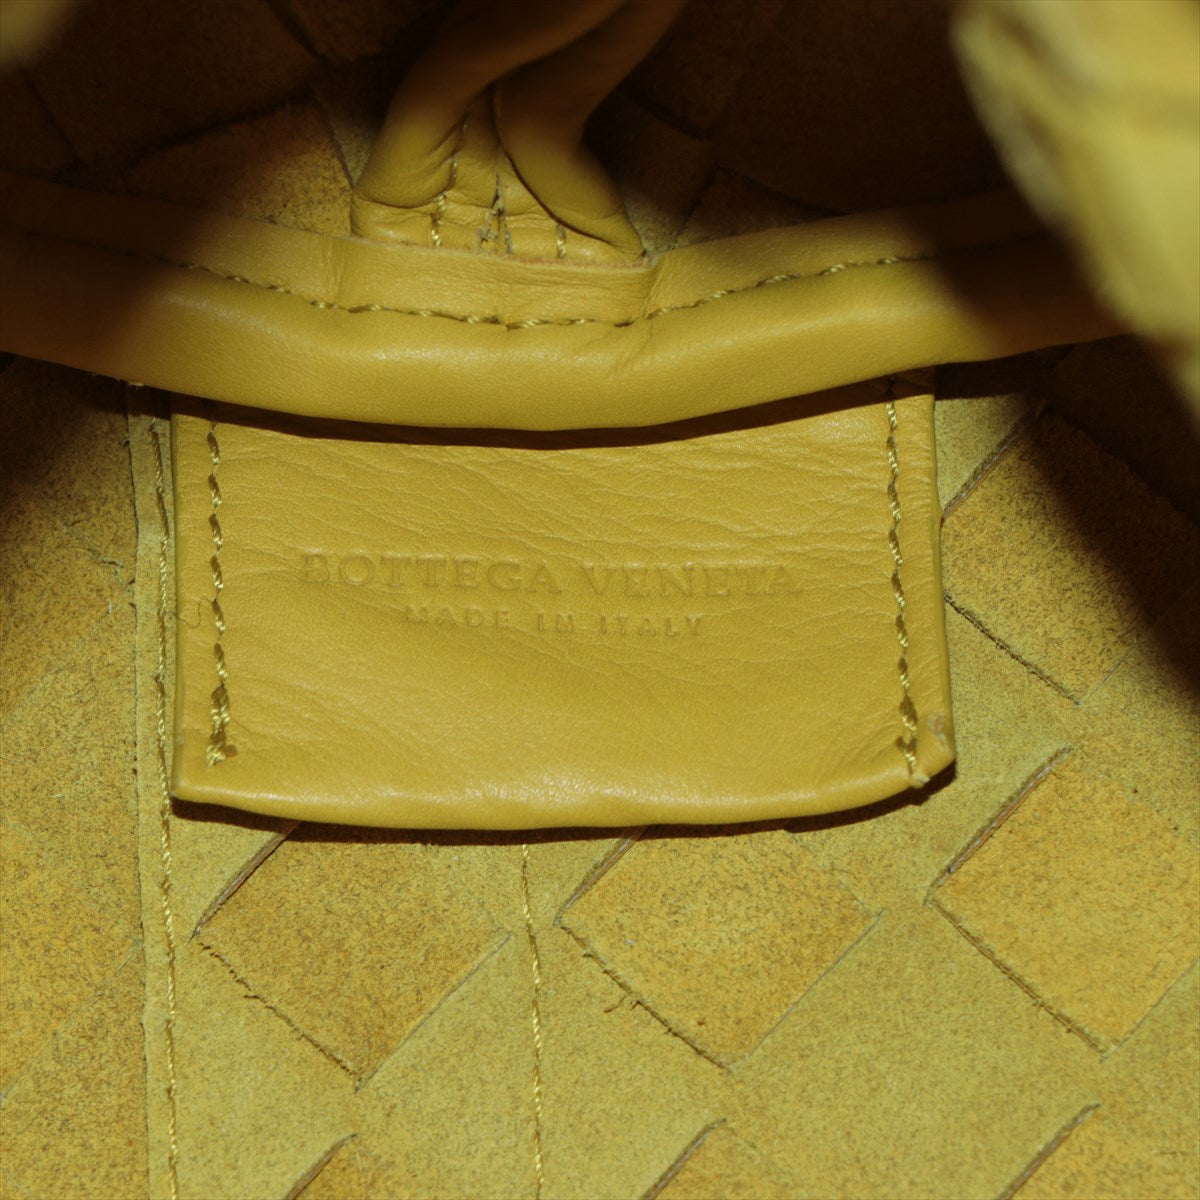 Bottega Veneta Intrecciato Leather Shoulder Bag Yellow